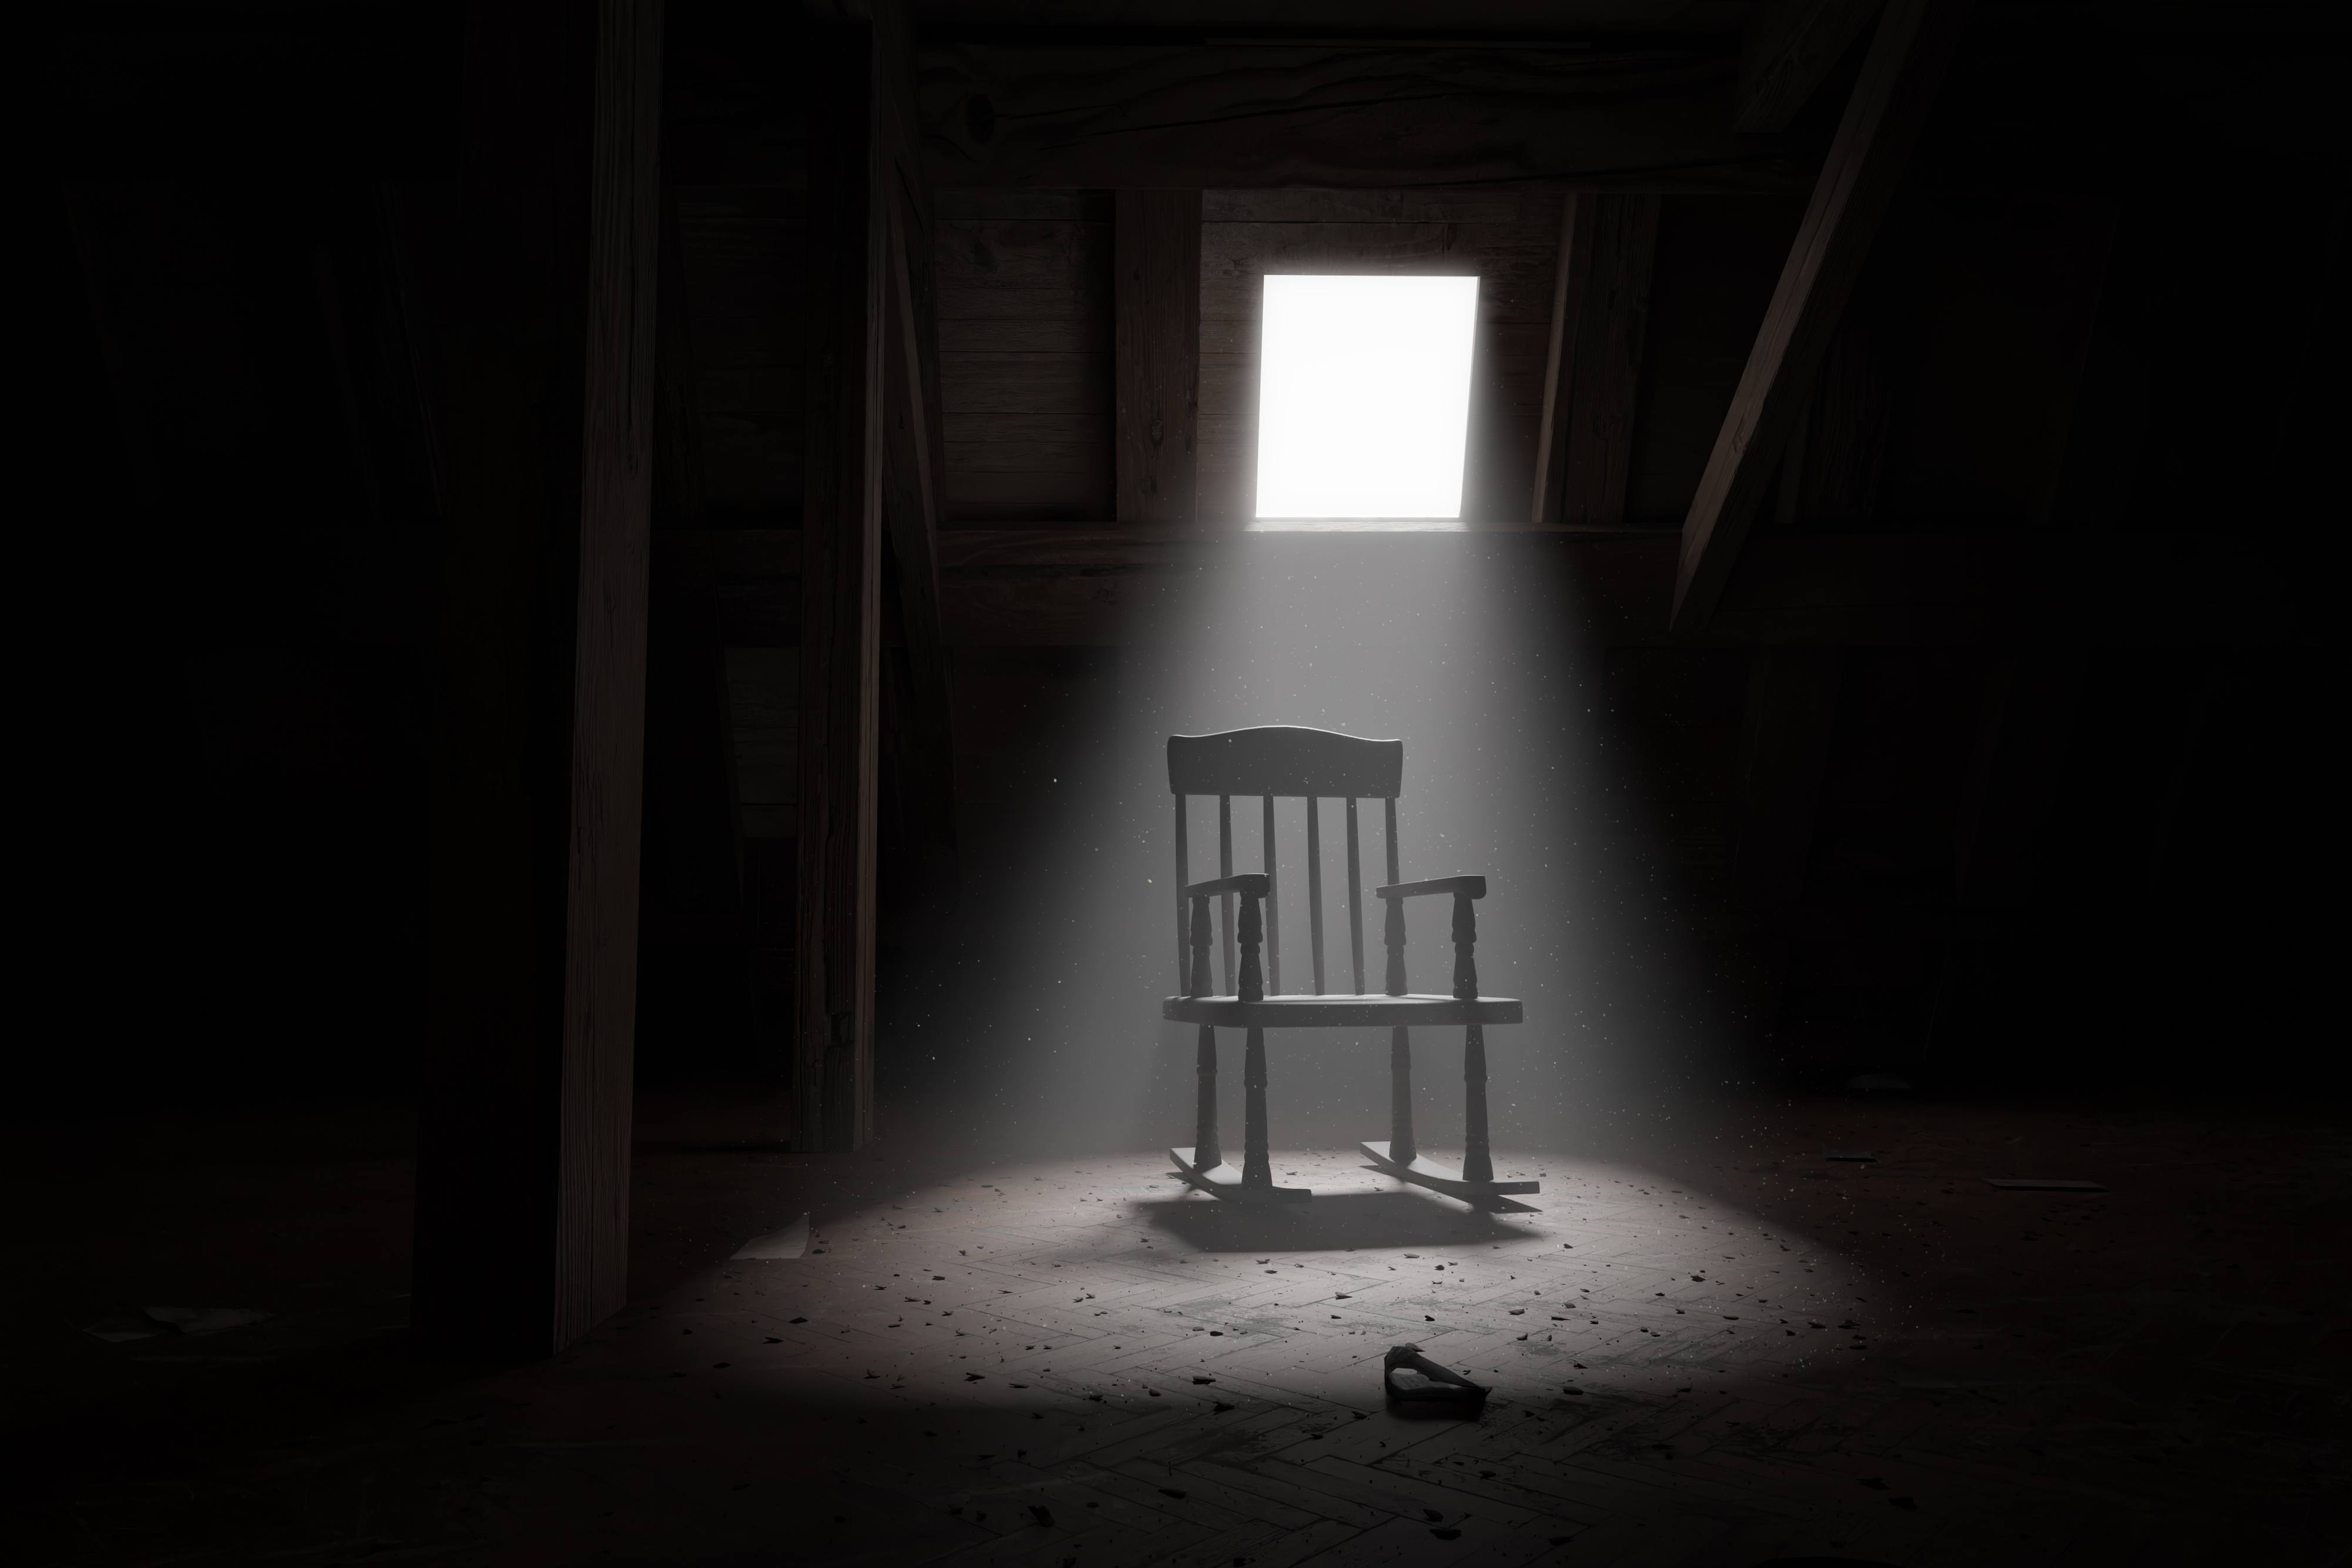 Rocking chair in a dark attic room